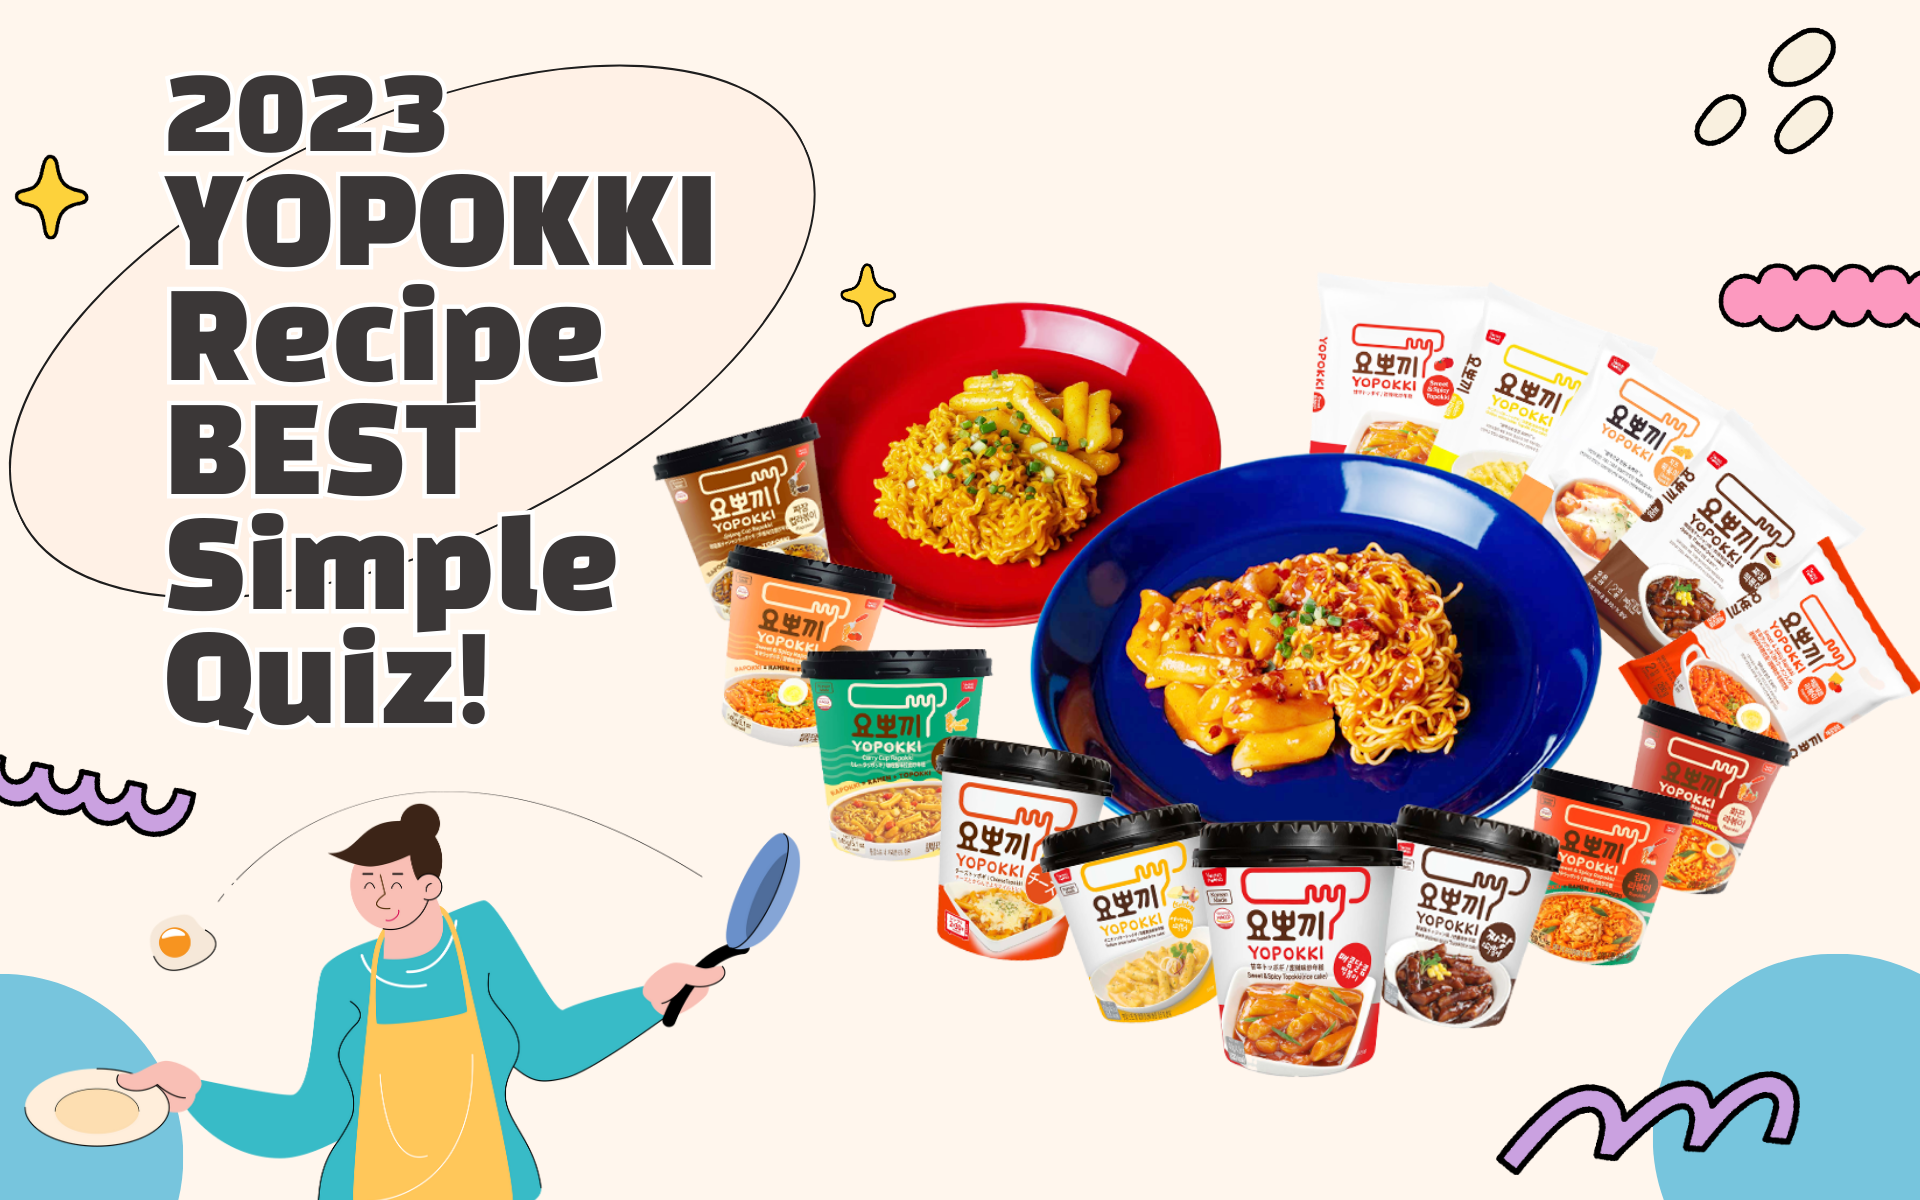 2023-yopokki-recipe-super-simple-quiz-Tteokbokki-Cup-Tteokbokki-Pack